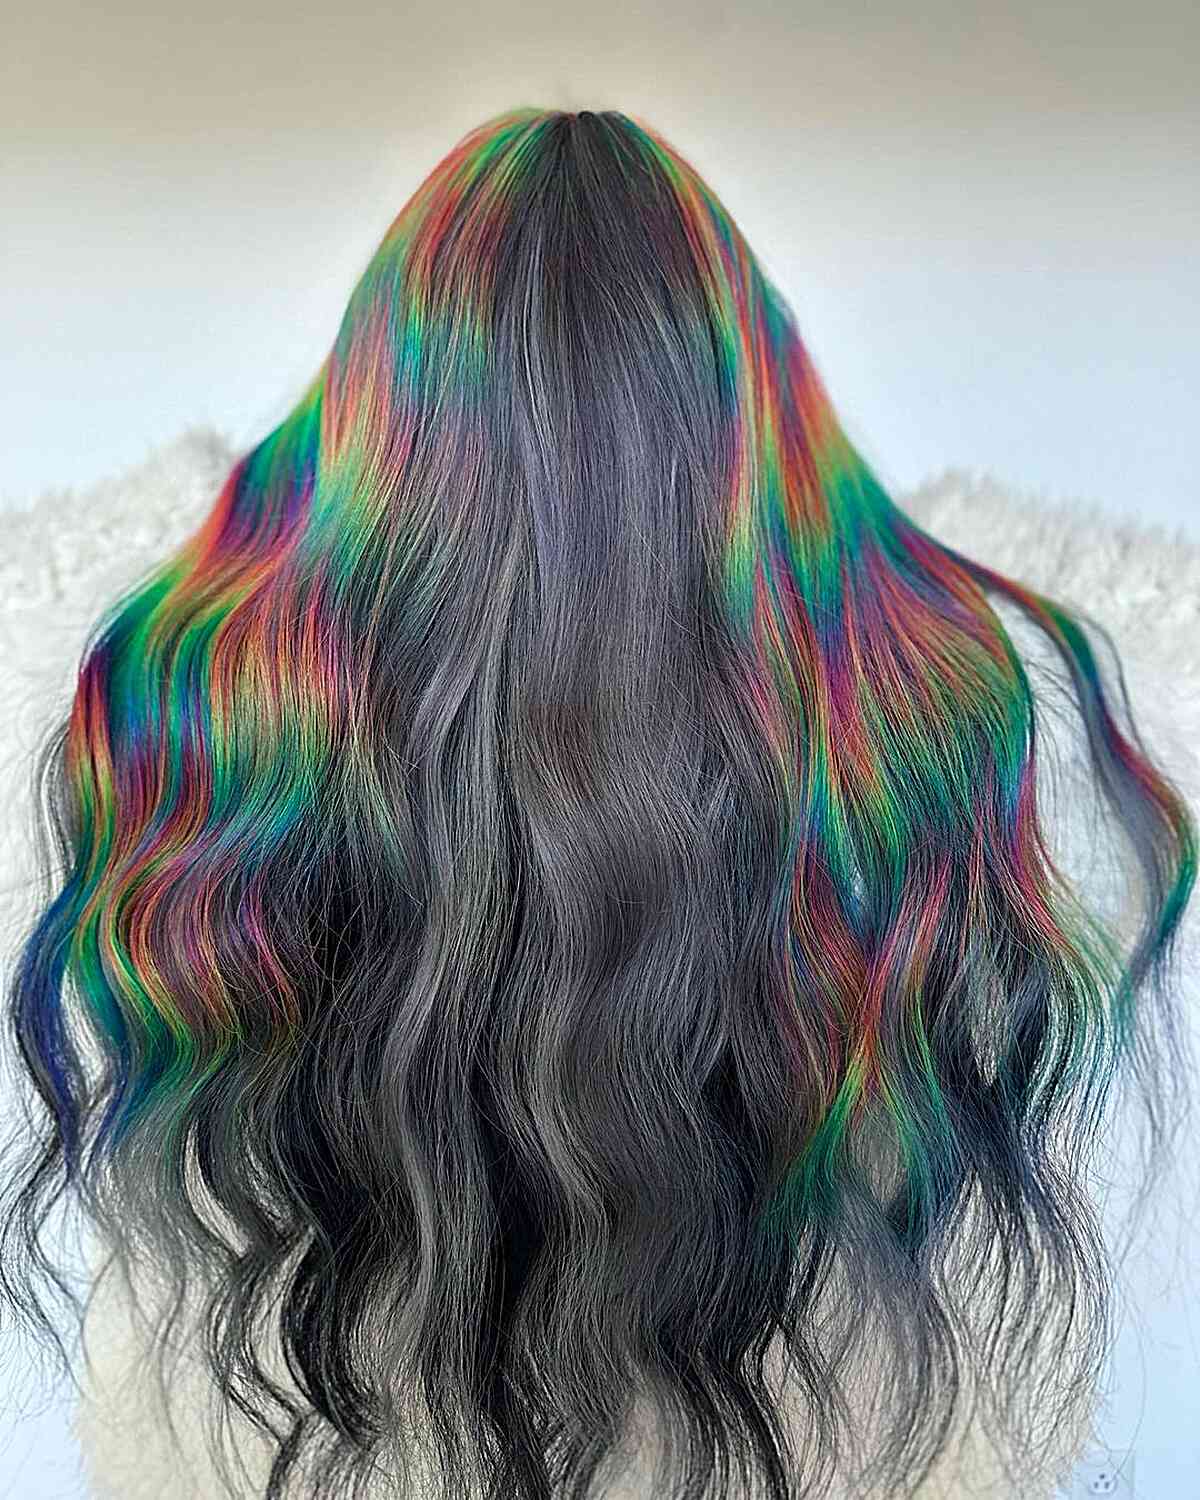 Holographic Rainbow Hues on Waist-Length Dark Smokey Hair